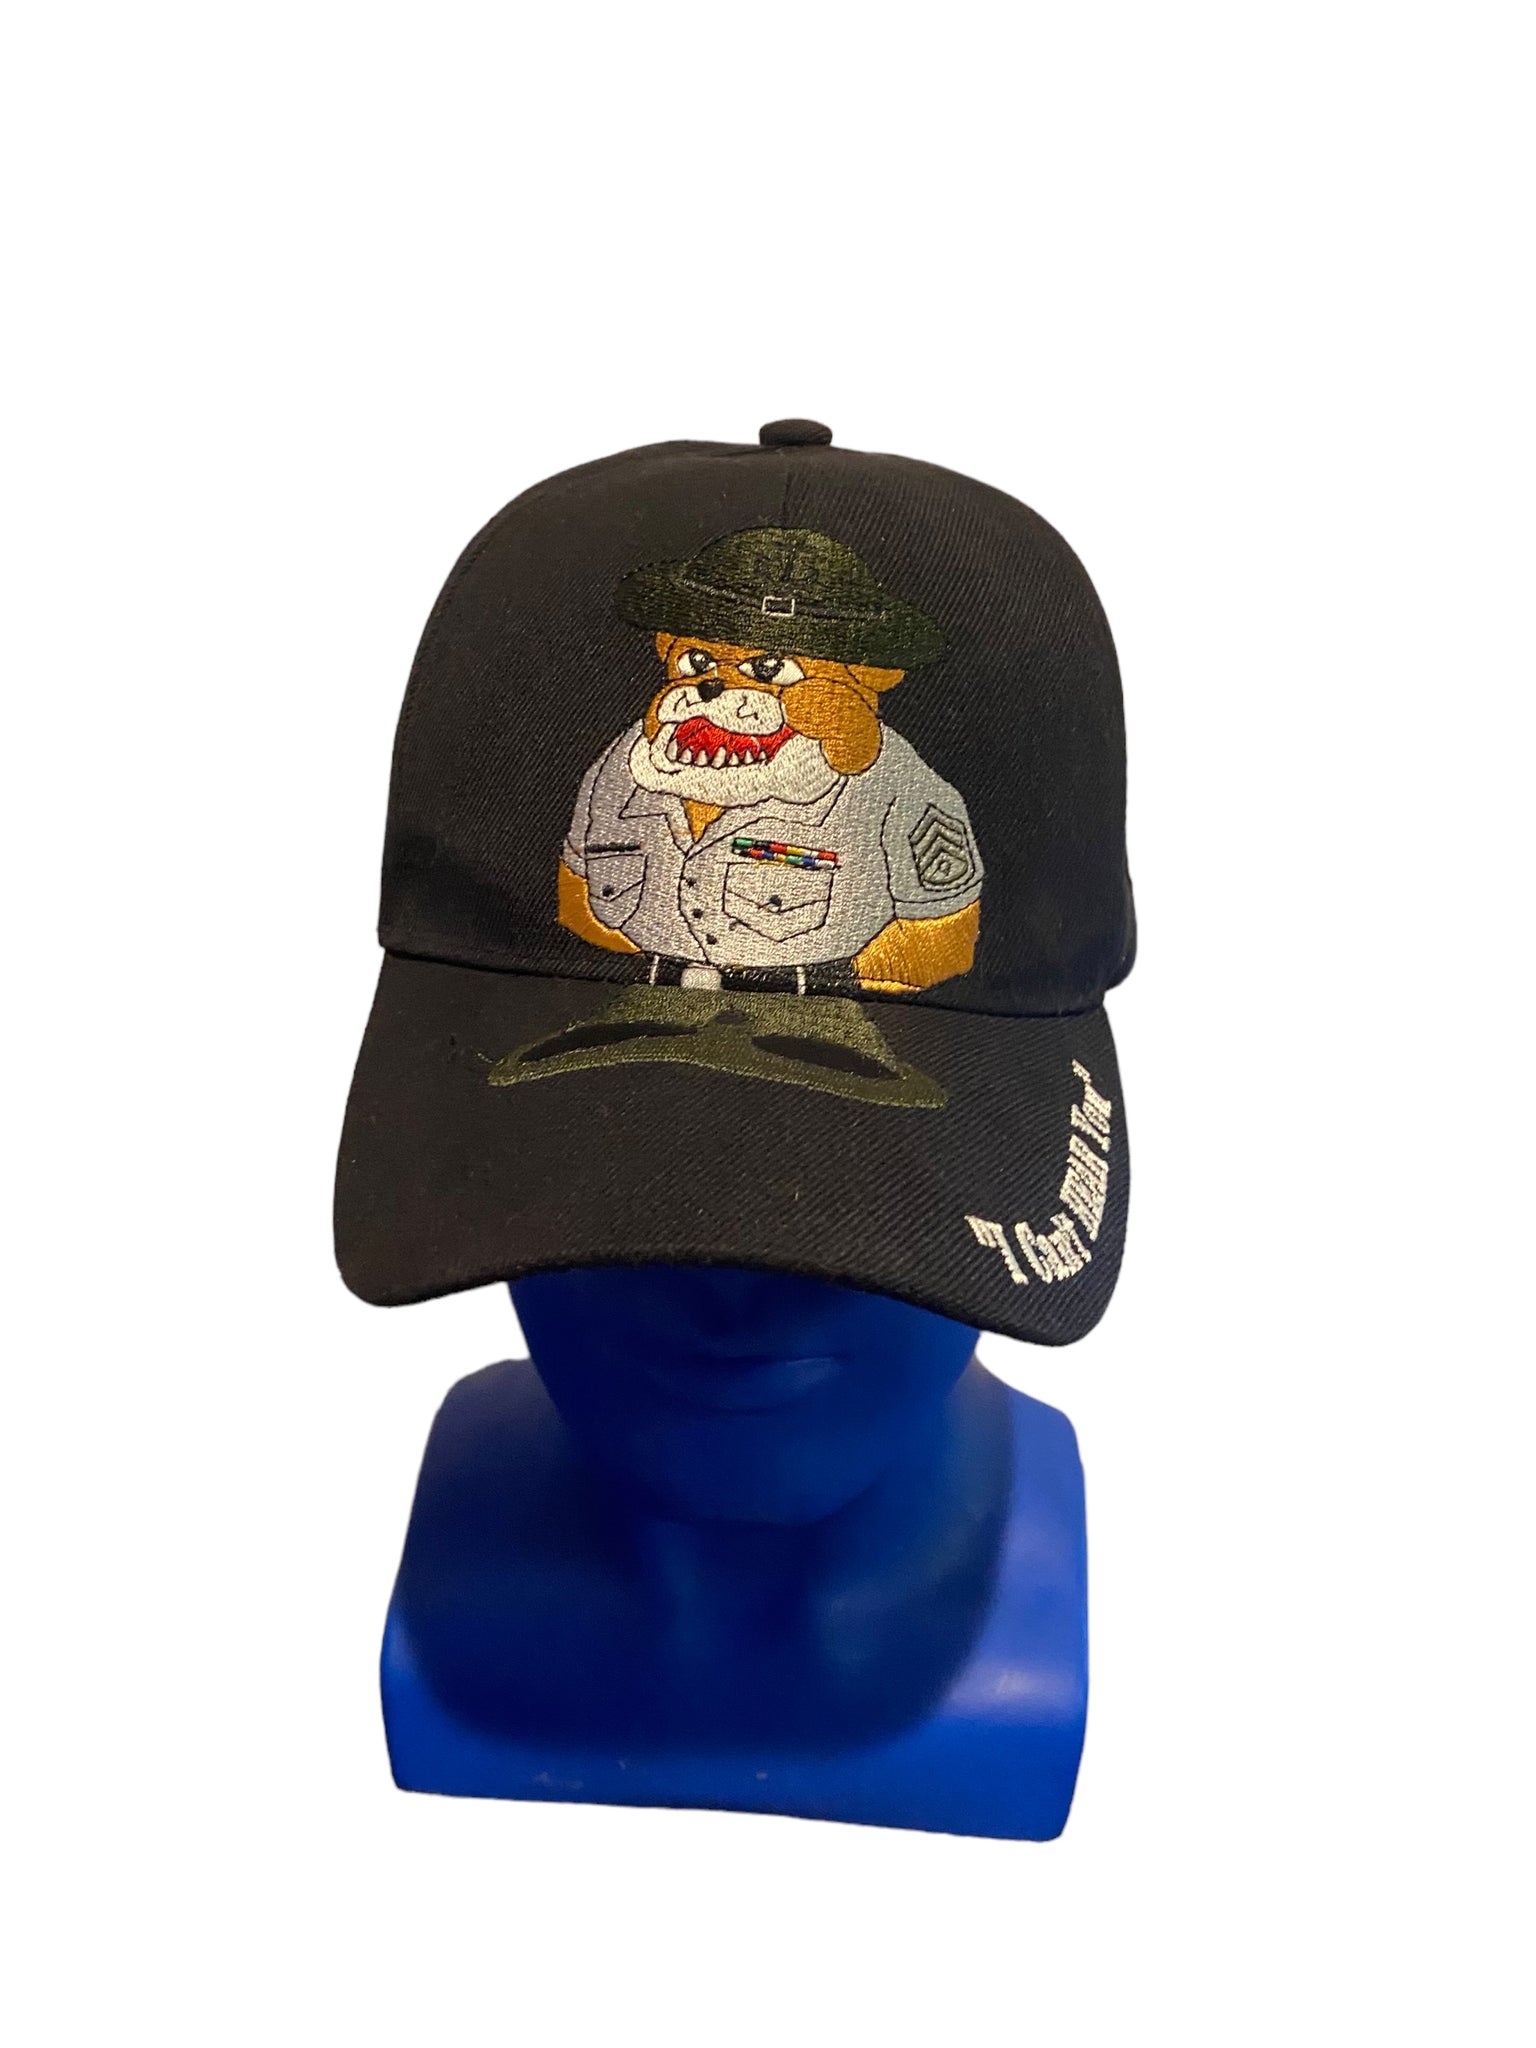 US Marines Black Acrylic Strapback Baseball Cap Hat CH17 NWT